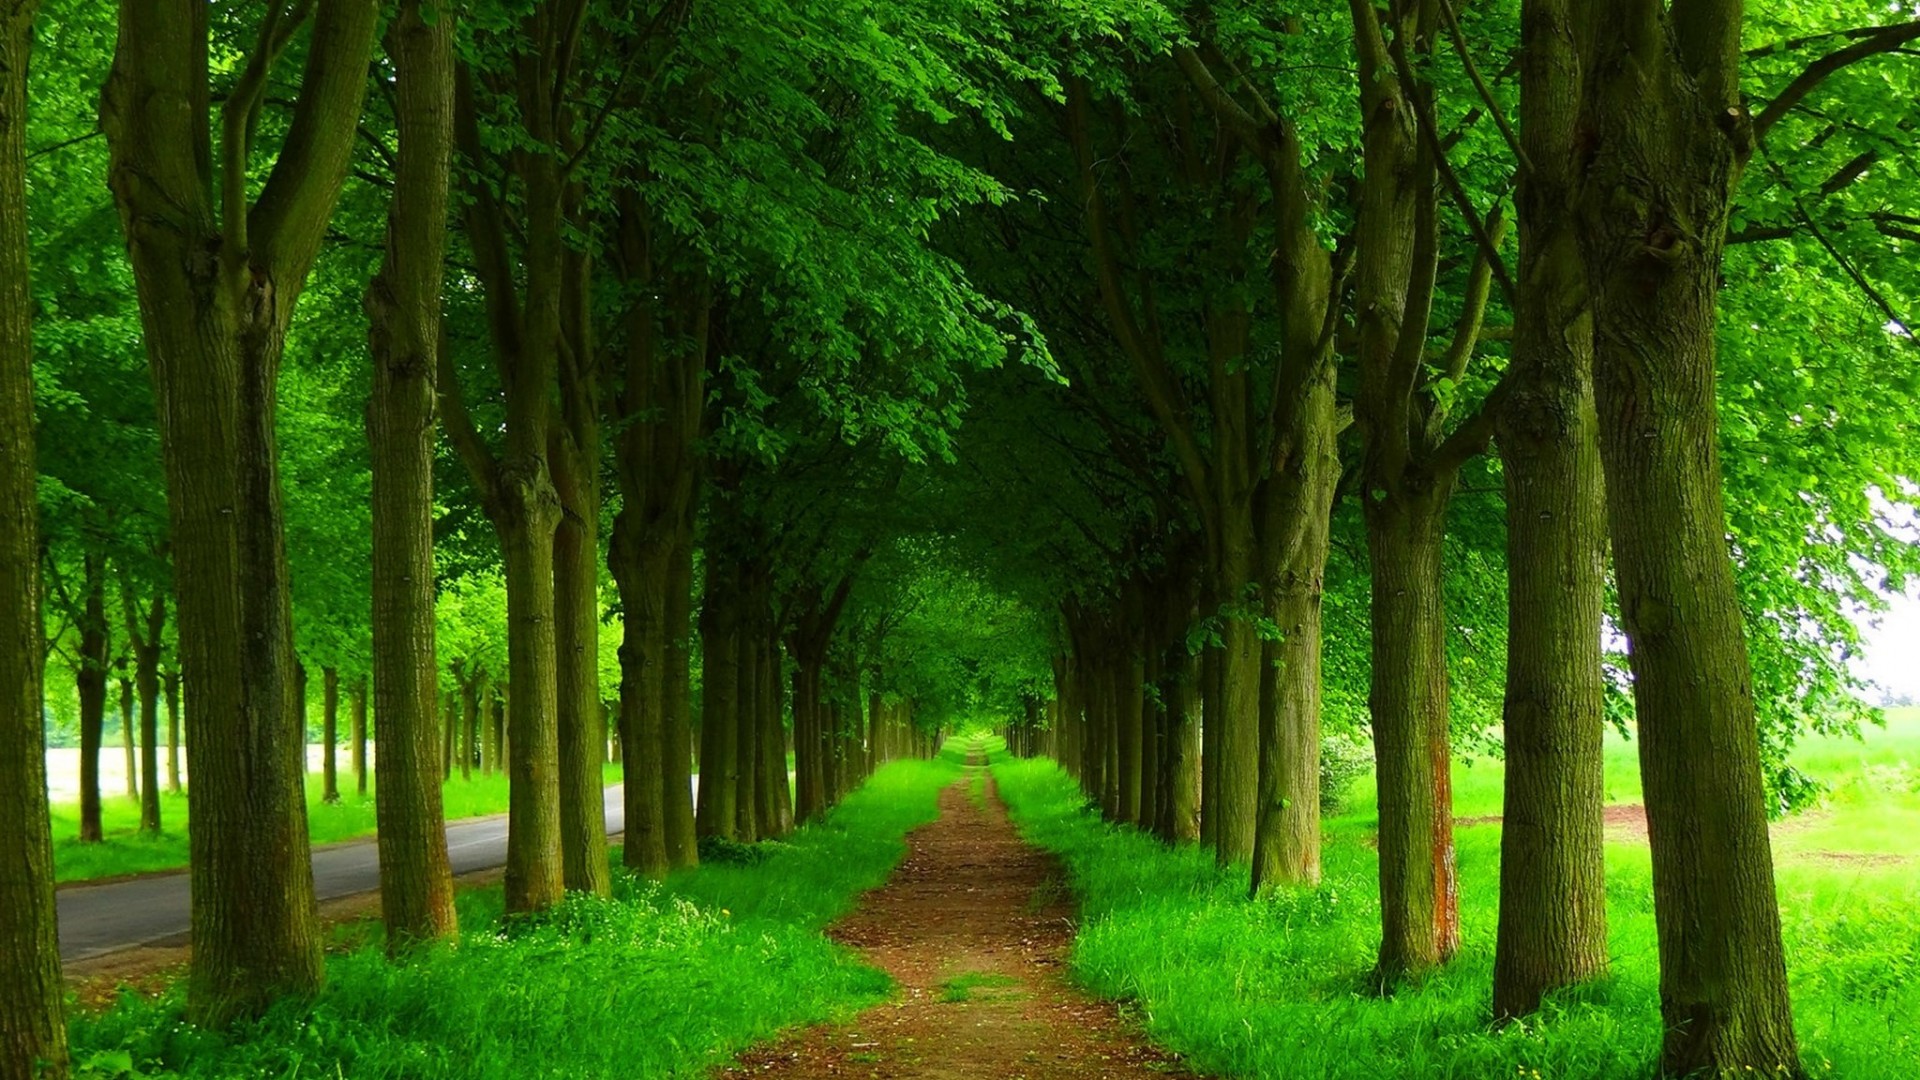 Green Nature Wallpaper Hd For Desktop Free Download ~ Full Hd Nature ...